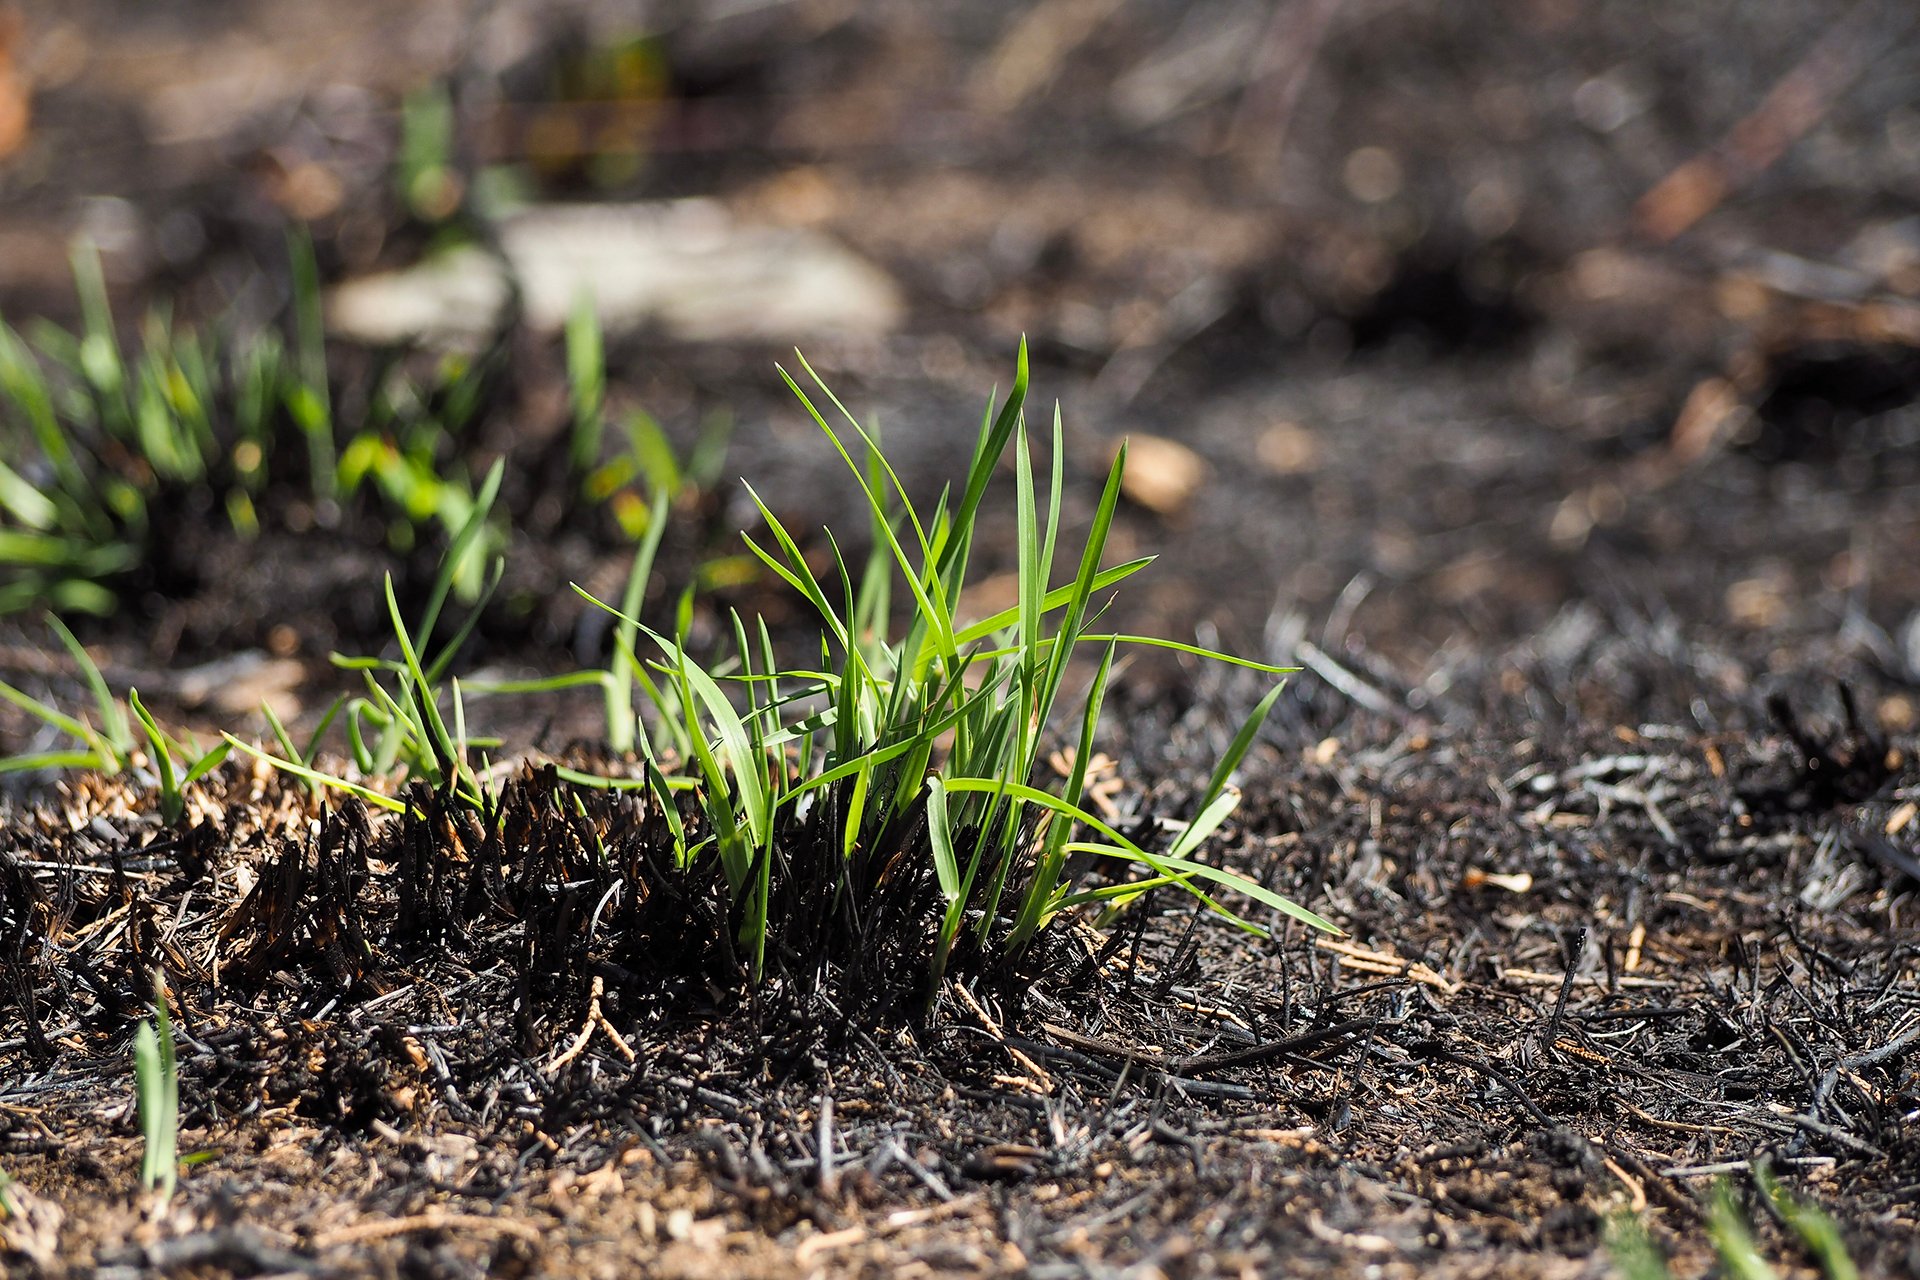 Thin blades of bright green grass sprout through deep brown soil